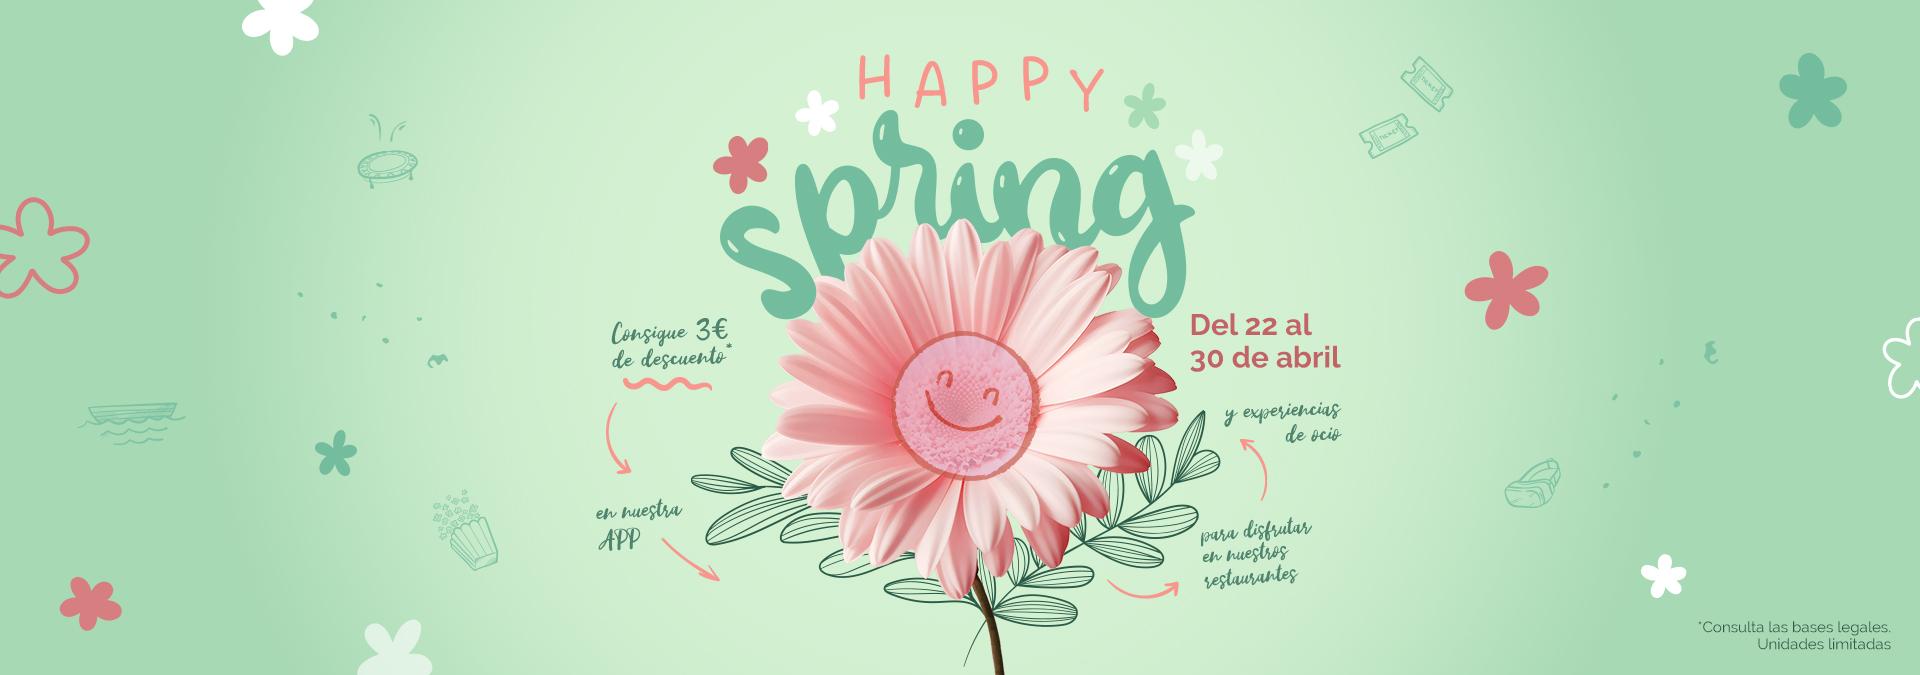 happy-spring-frontalweb.jpg